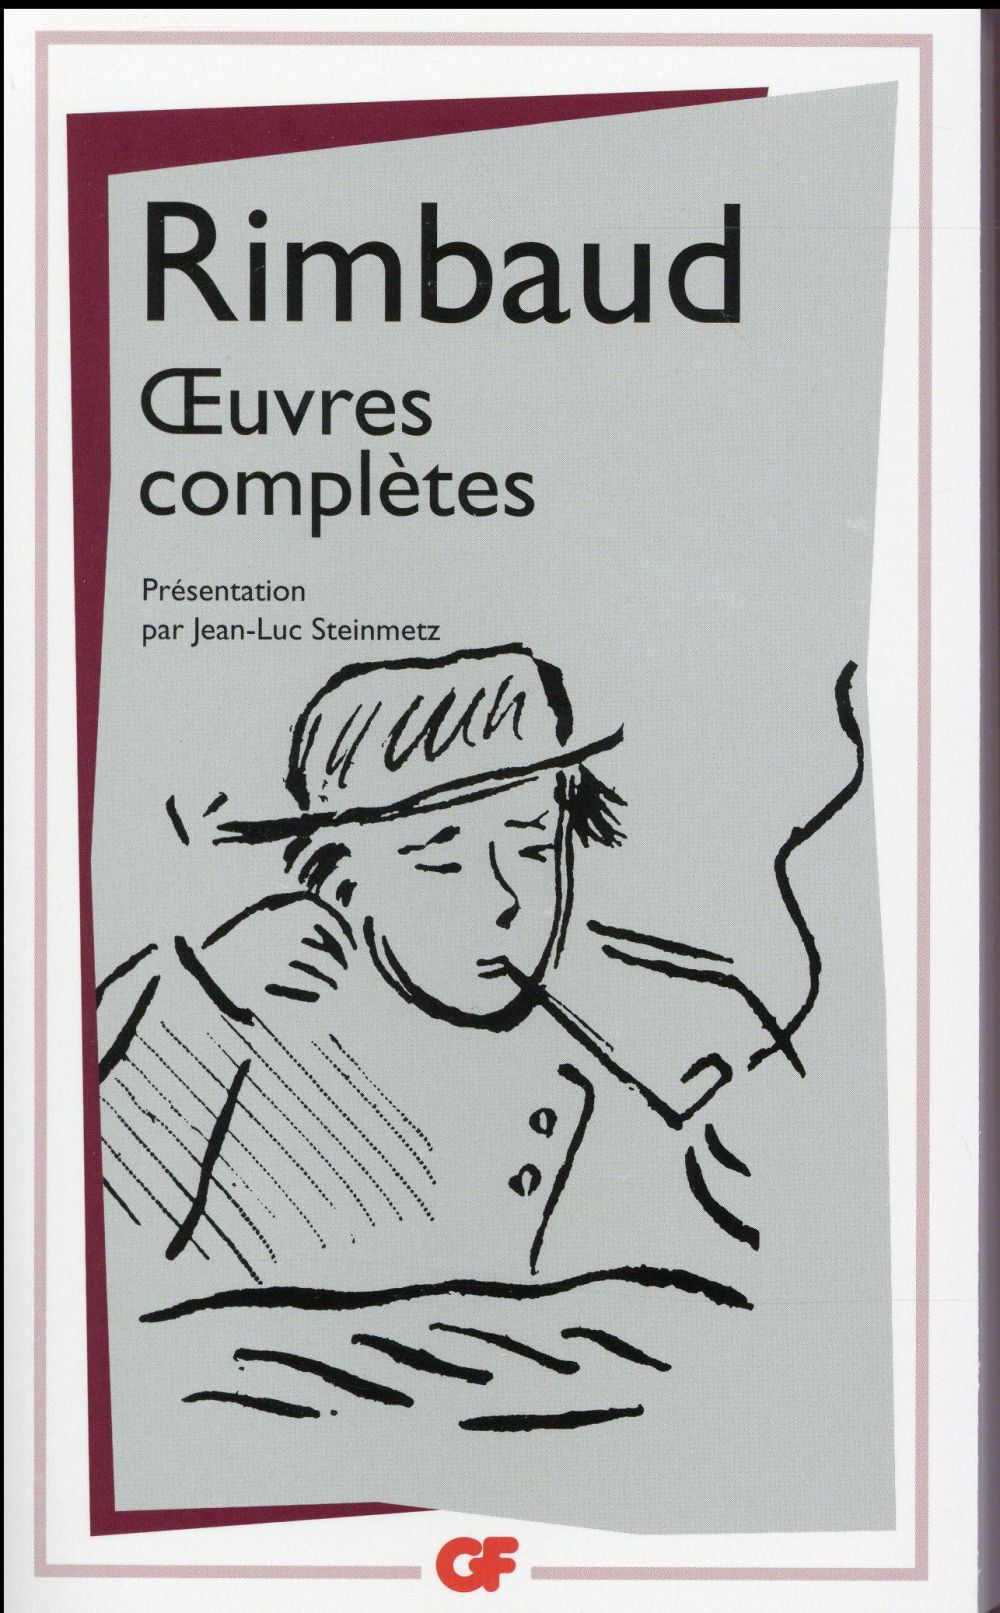 PCL bac - Rimbaud - Cahiers de Douai